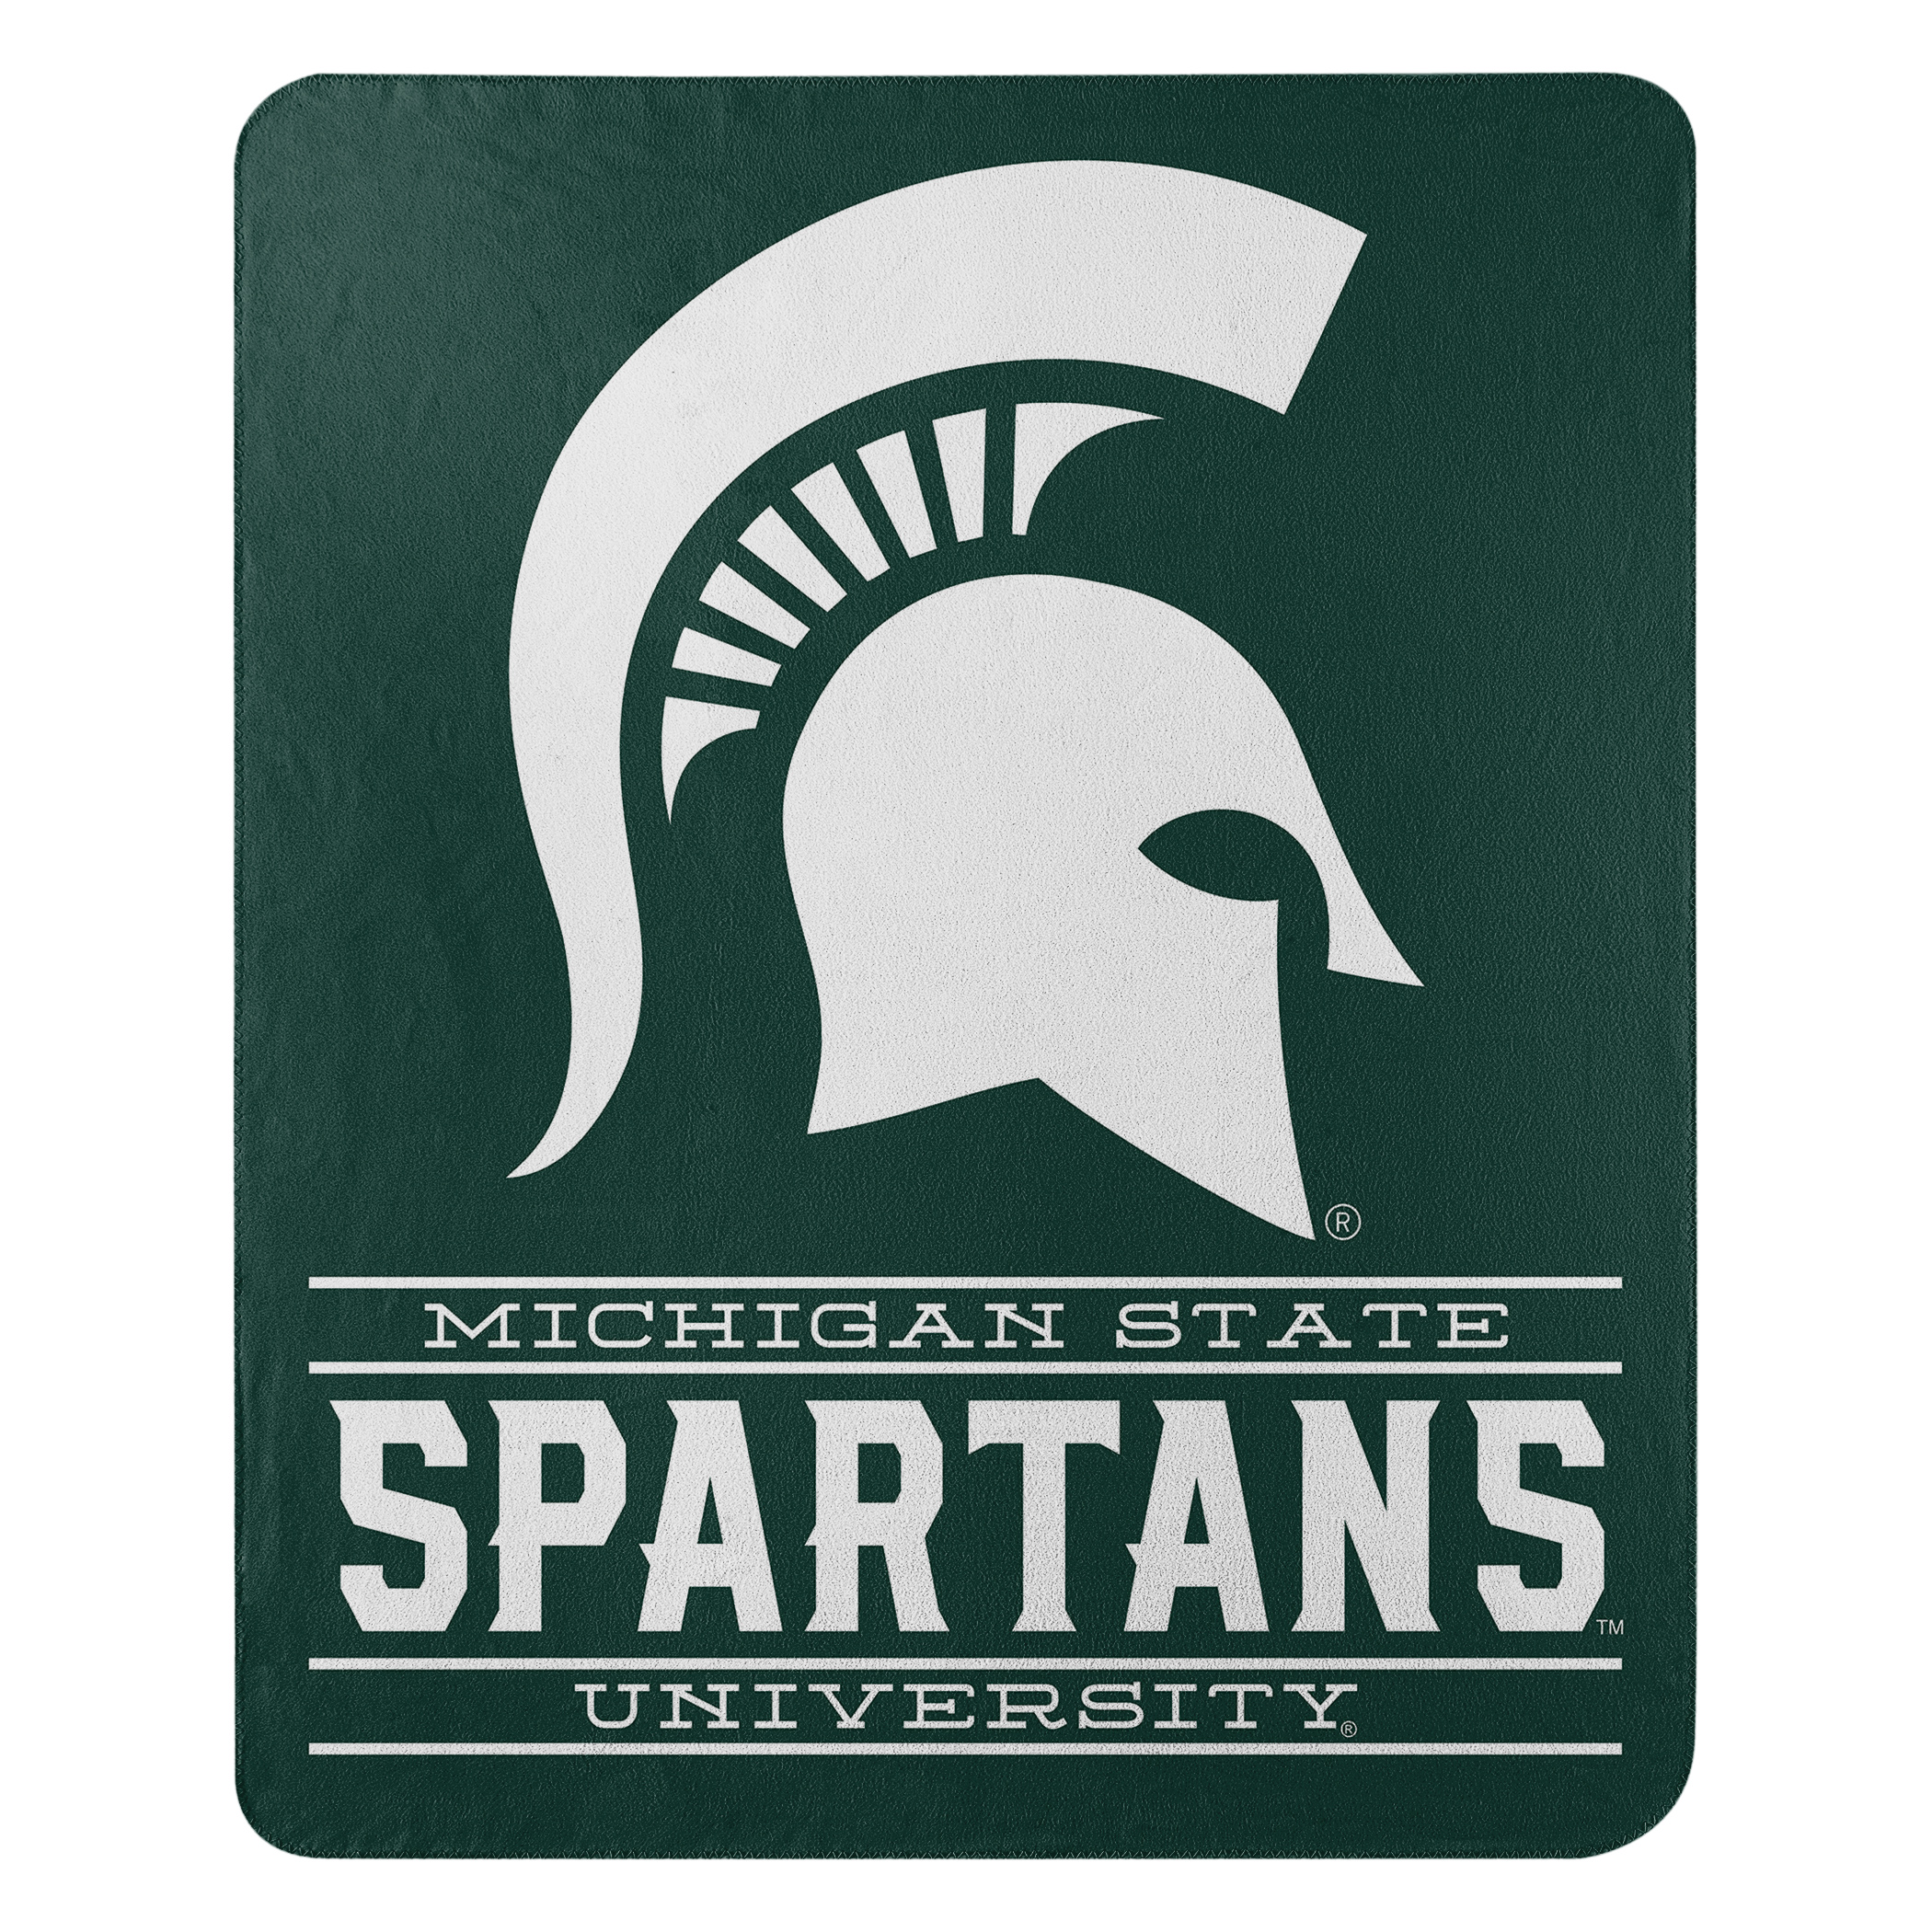 Michigan State Spartans Blanket 50x60 Fleece Control Design Special Order